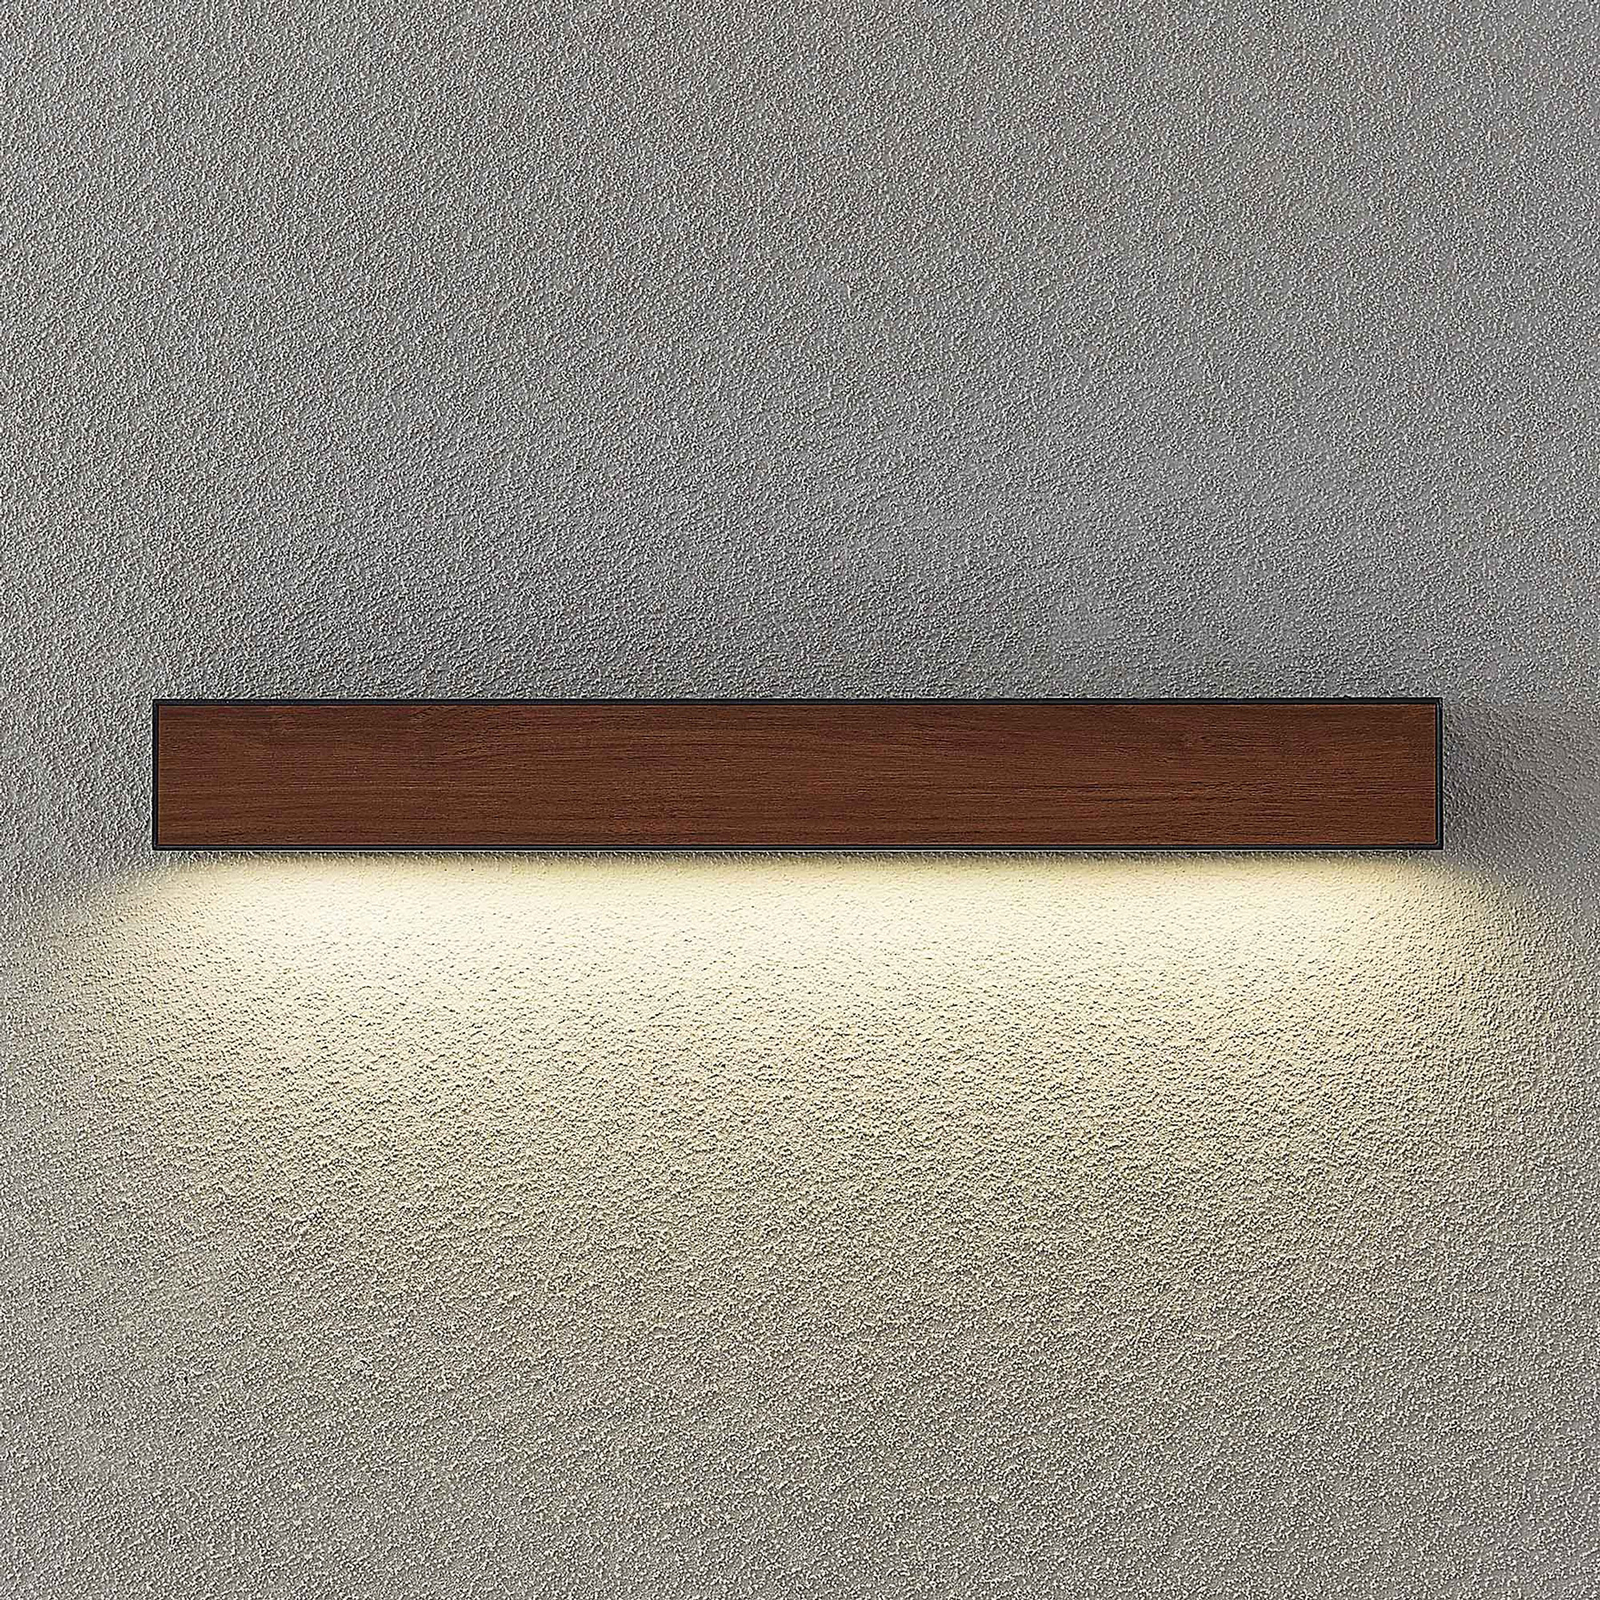 Lucande Lengo nástenné LED CCT, 50 cm, 1-pl. drevo